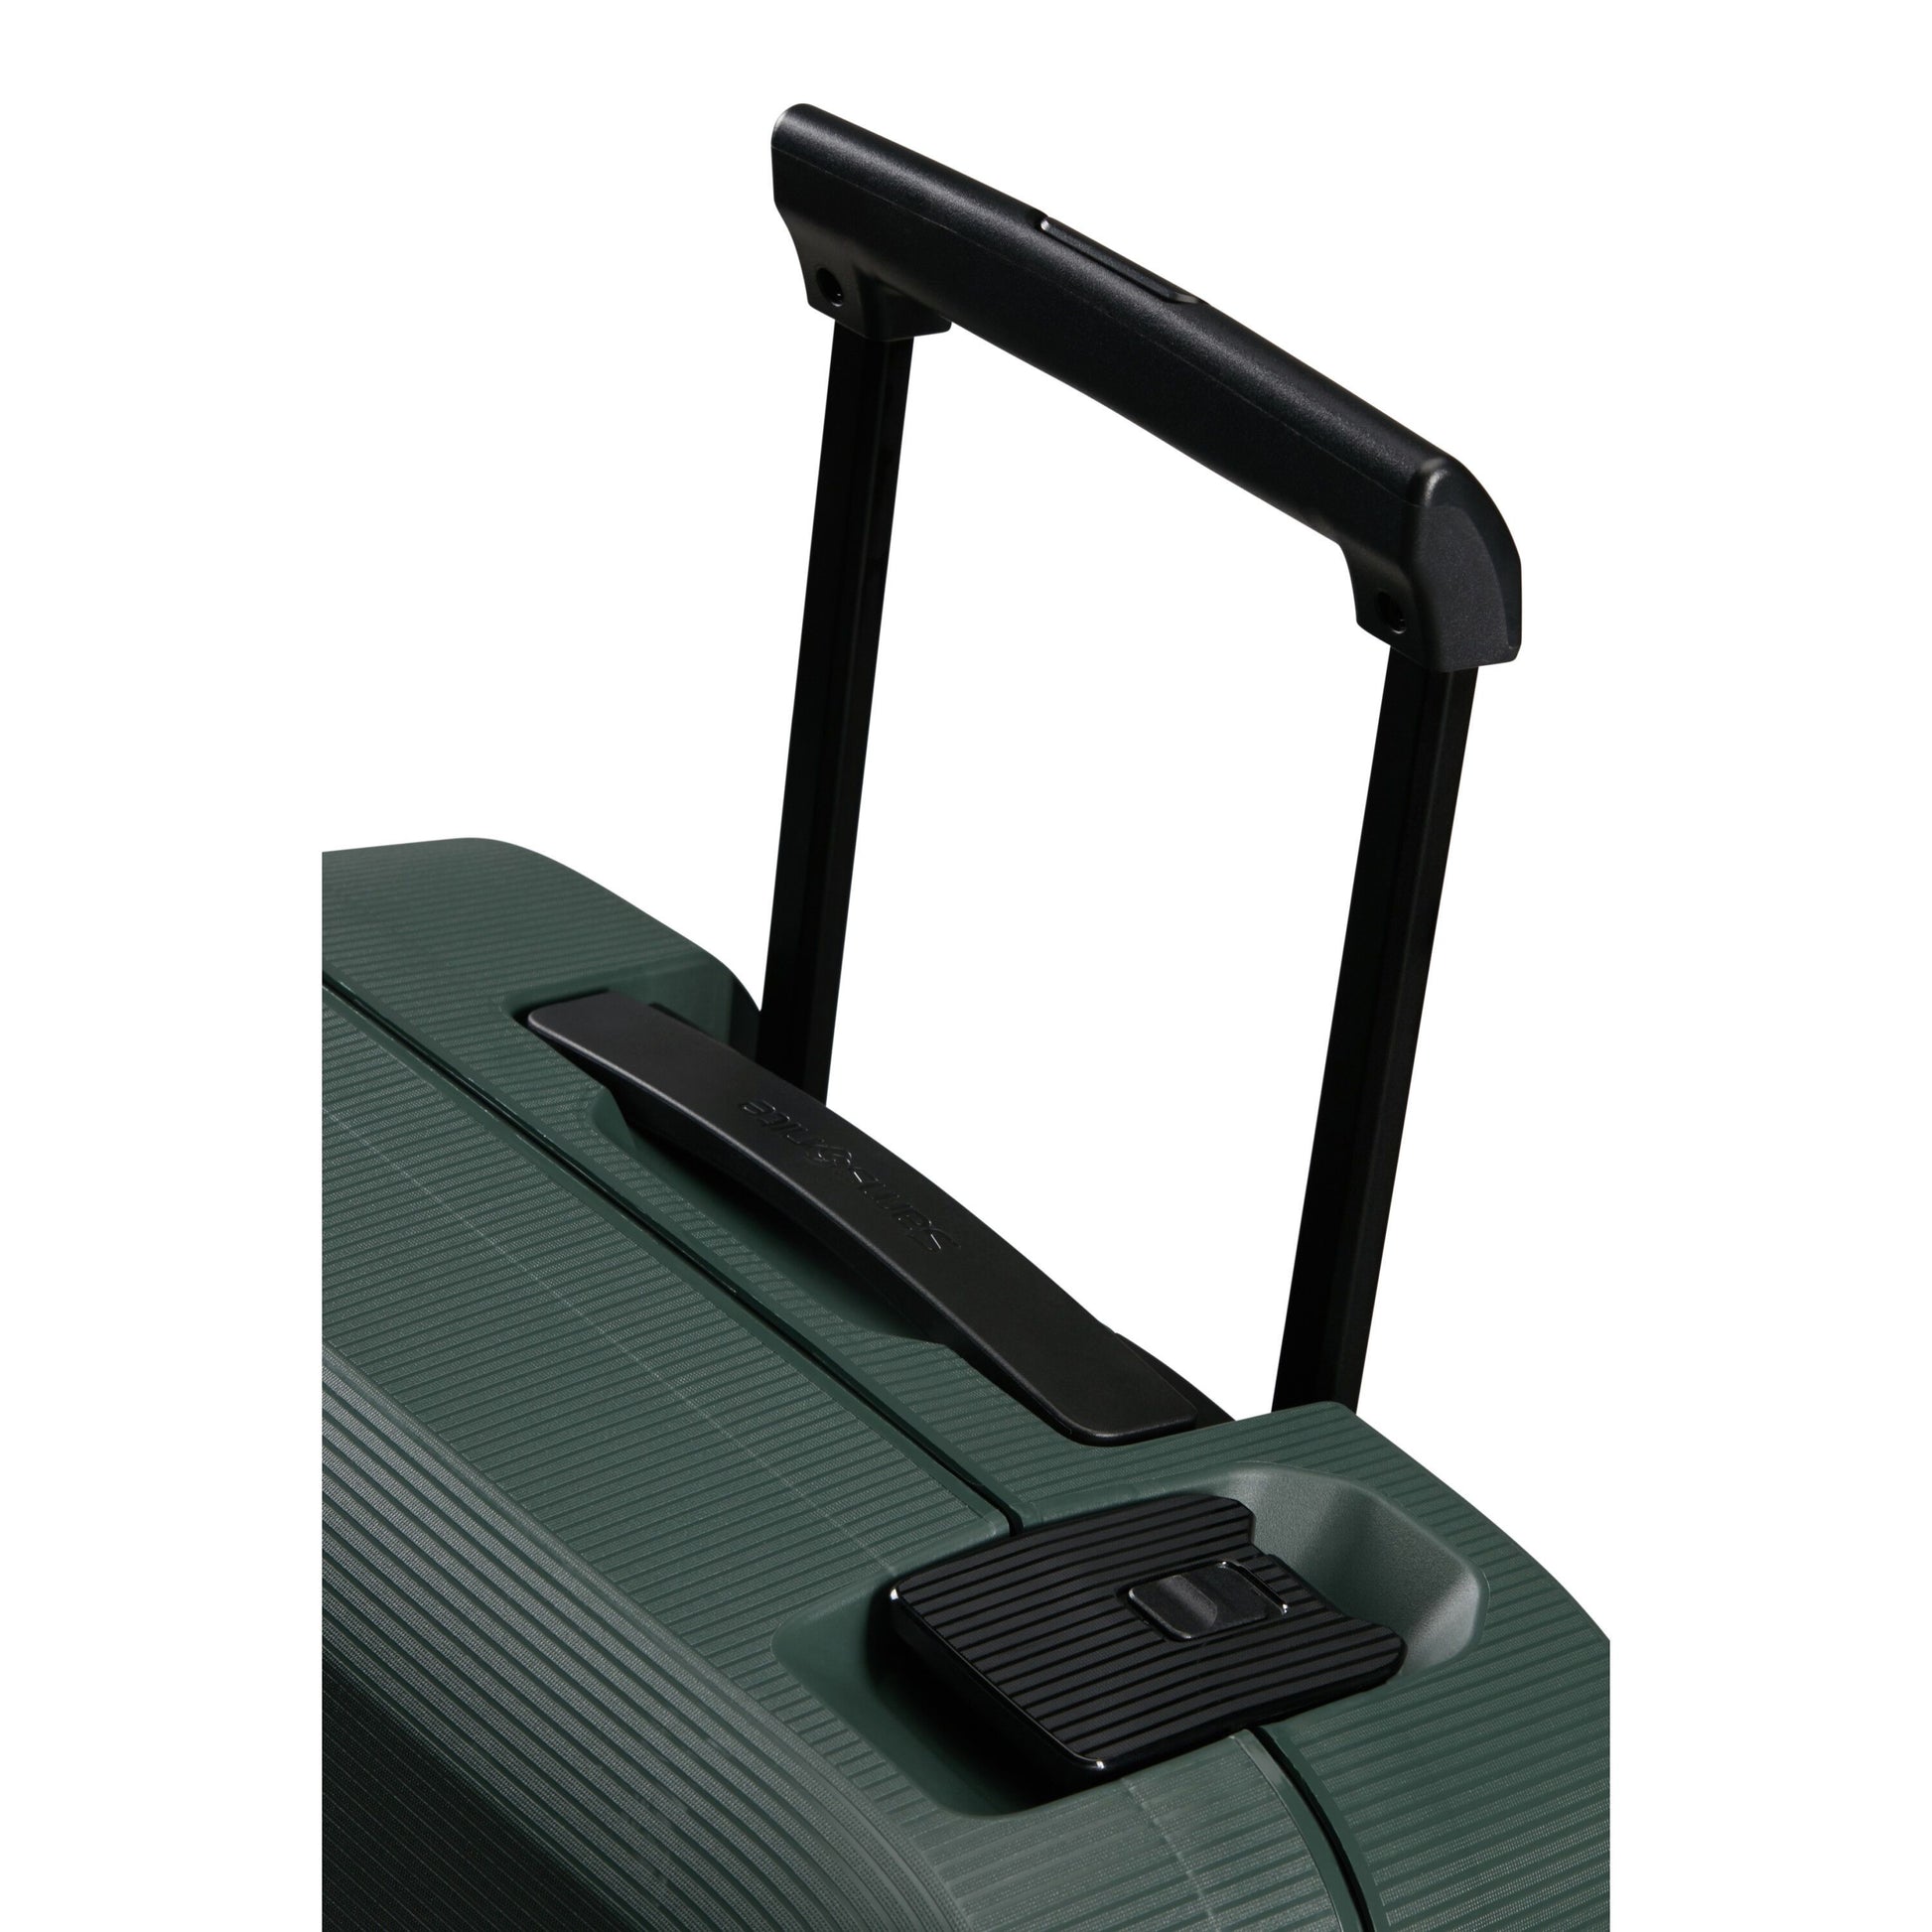 Samsonite Magnum ECO Carry-On Spinner Luggage